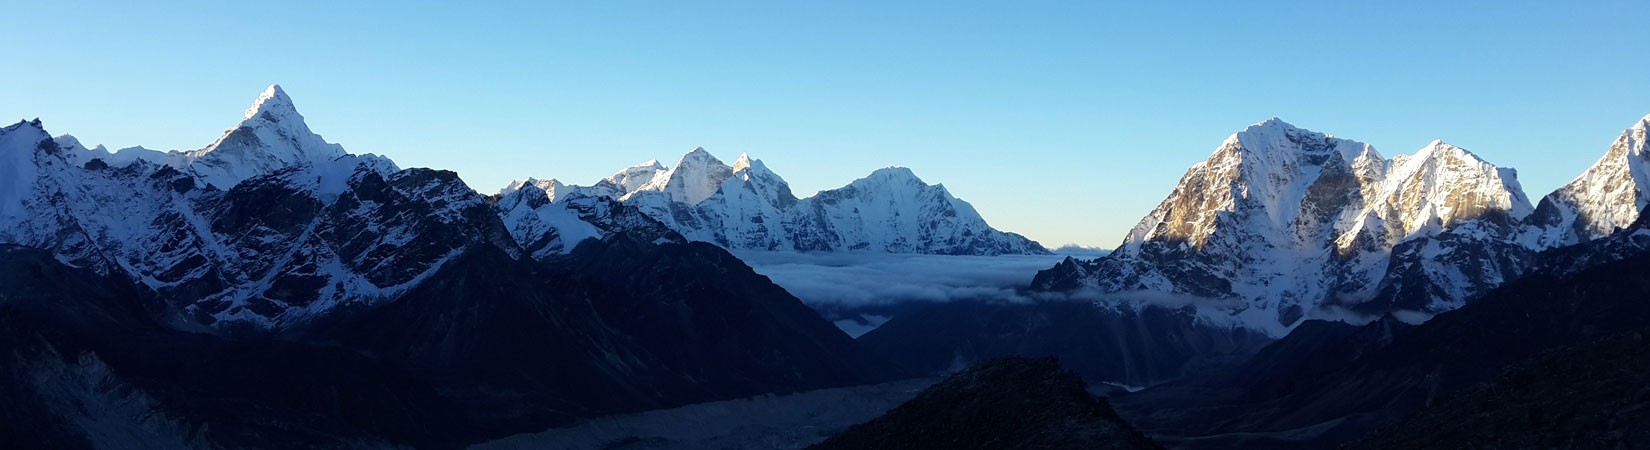 Everest Panoroma Trek